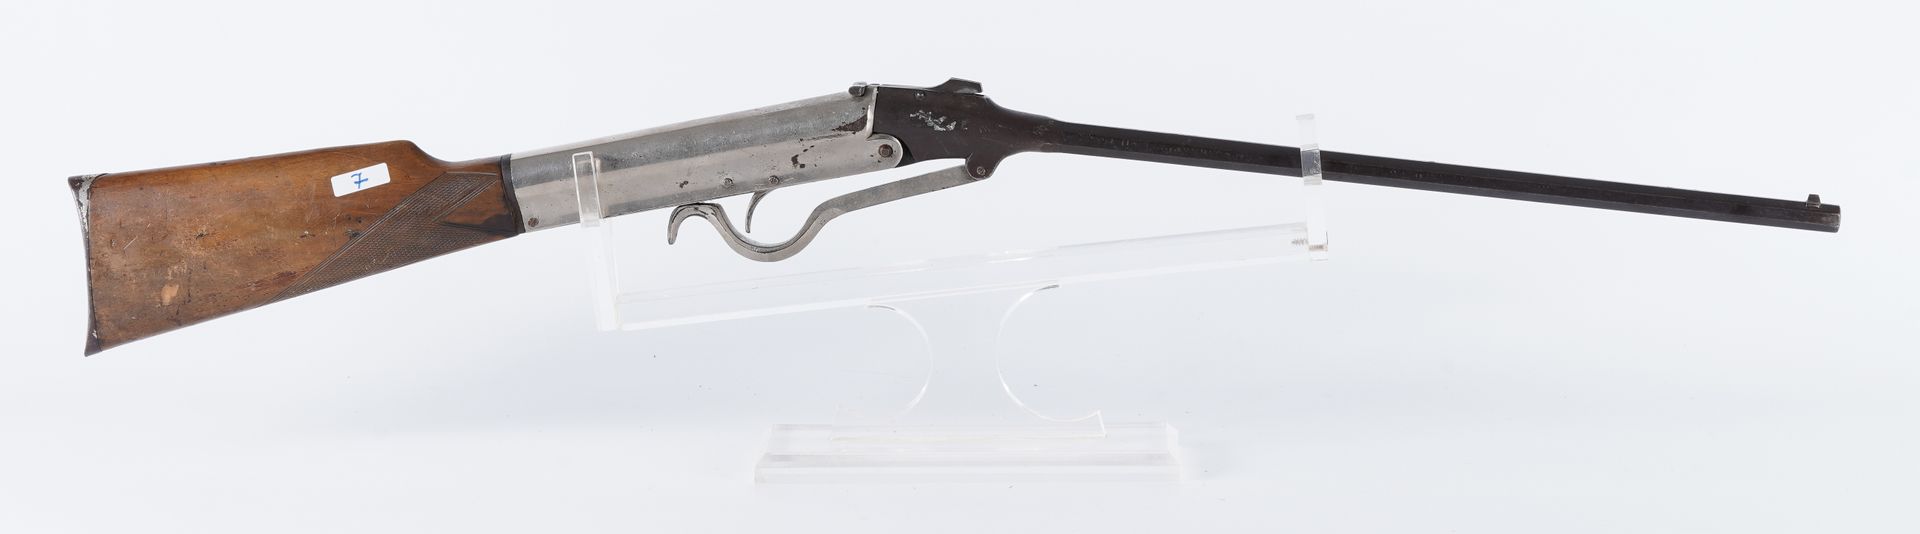 1900 rifle de perdigones (aire) en calibre 5.5mm, todo d…